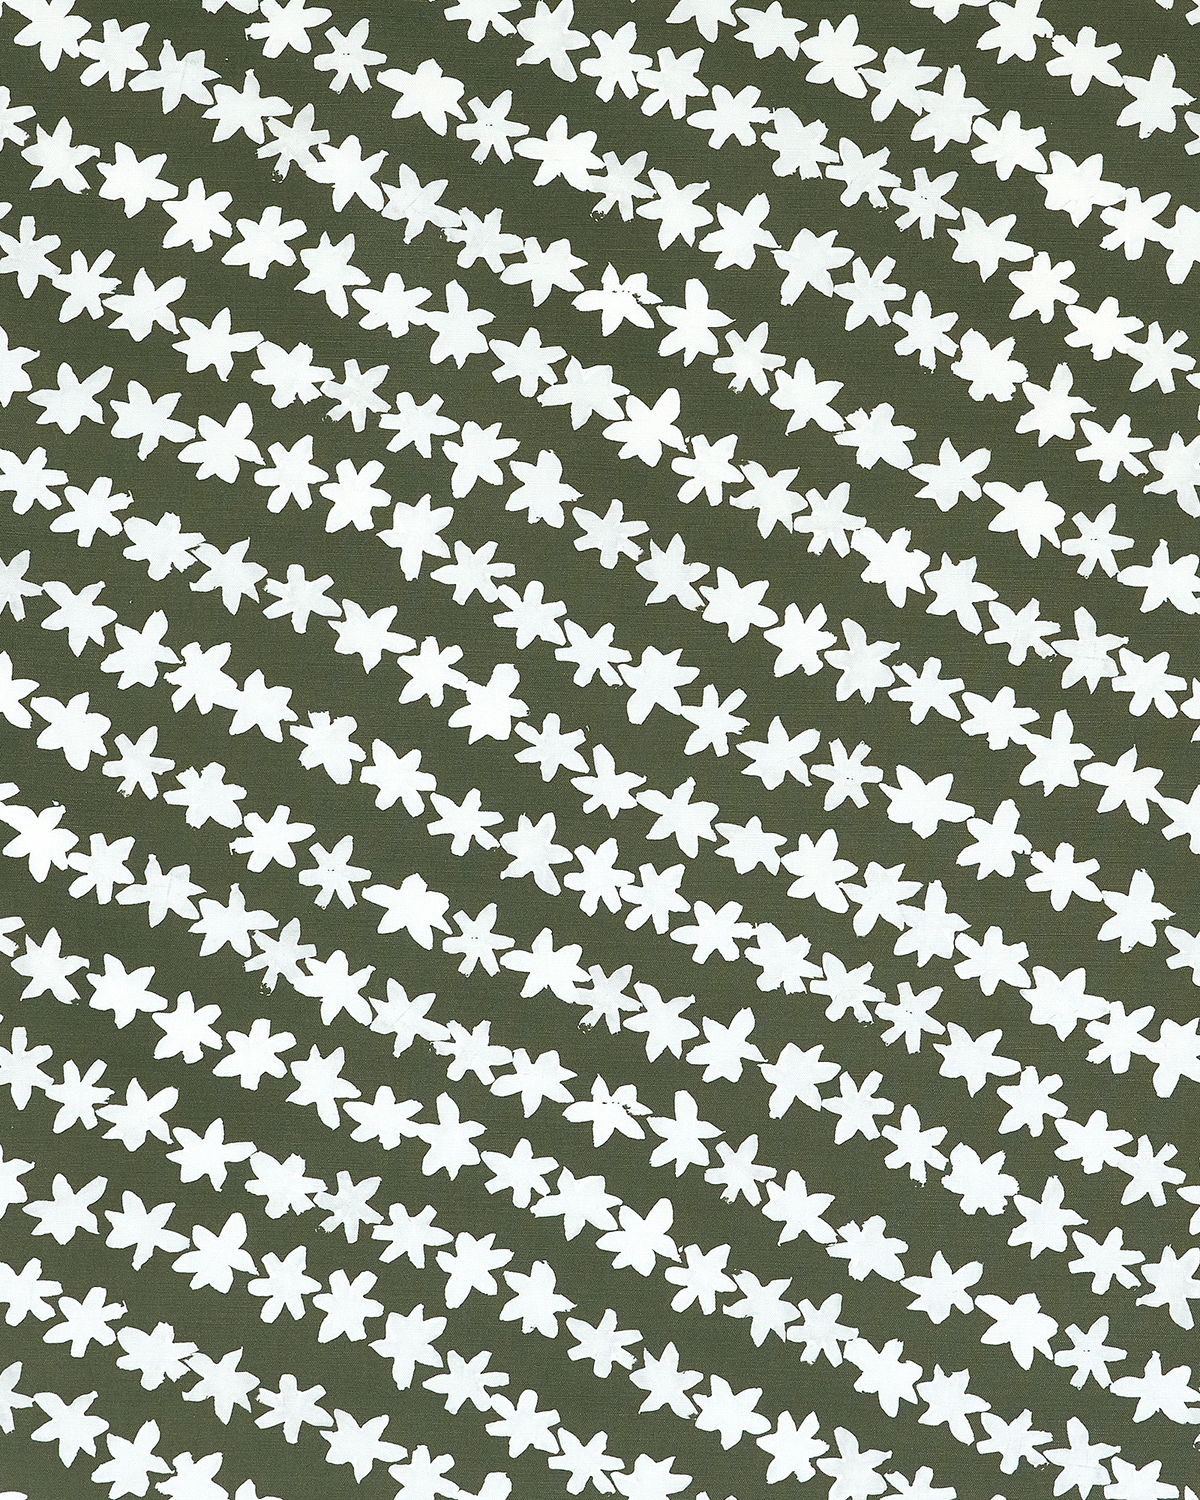 Stamped Garland Fabric in Dark Olive